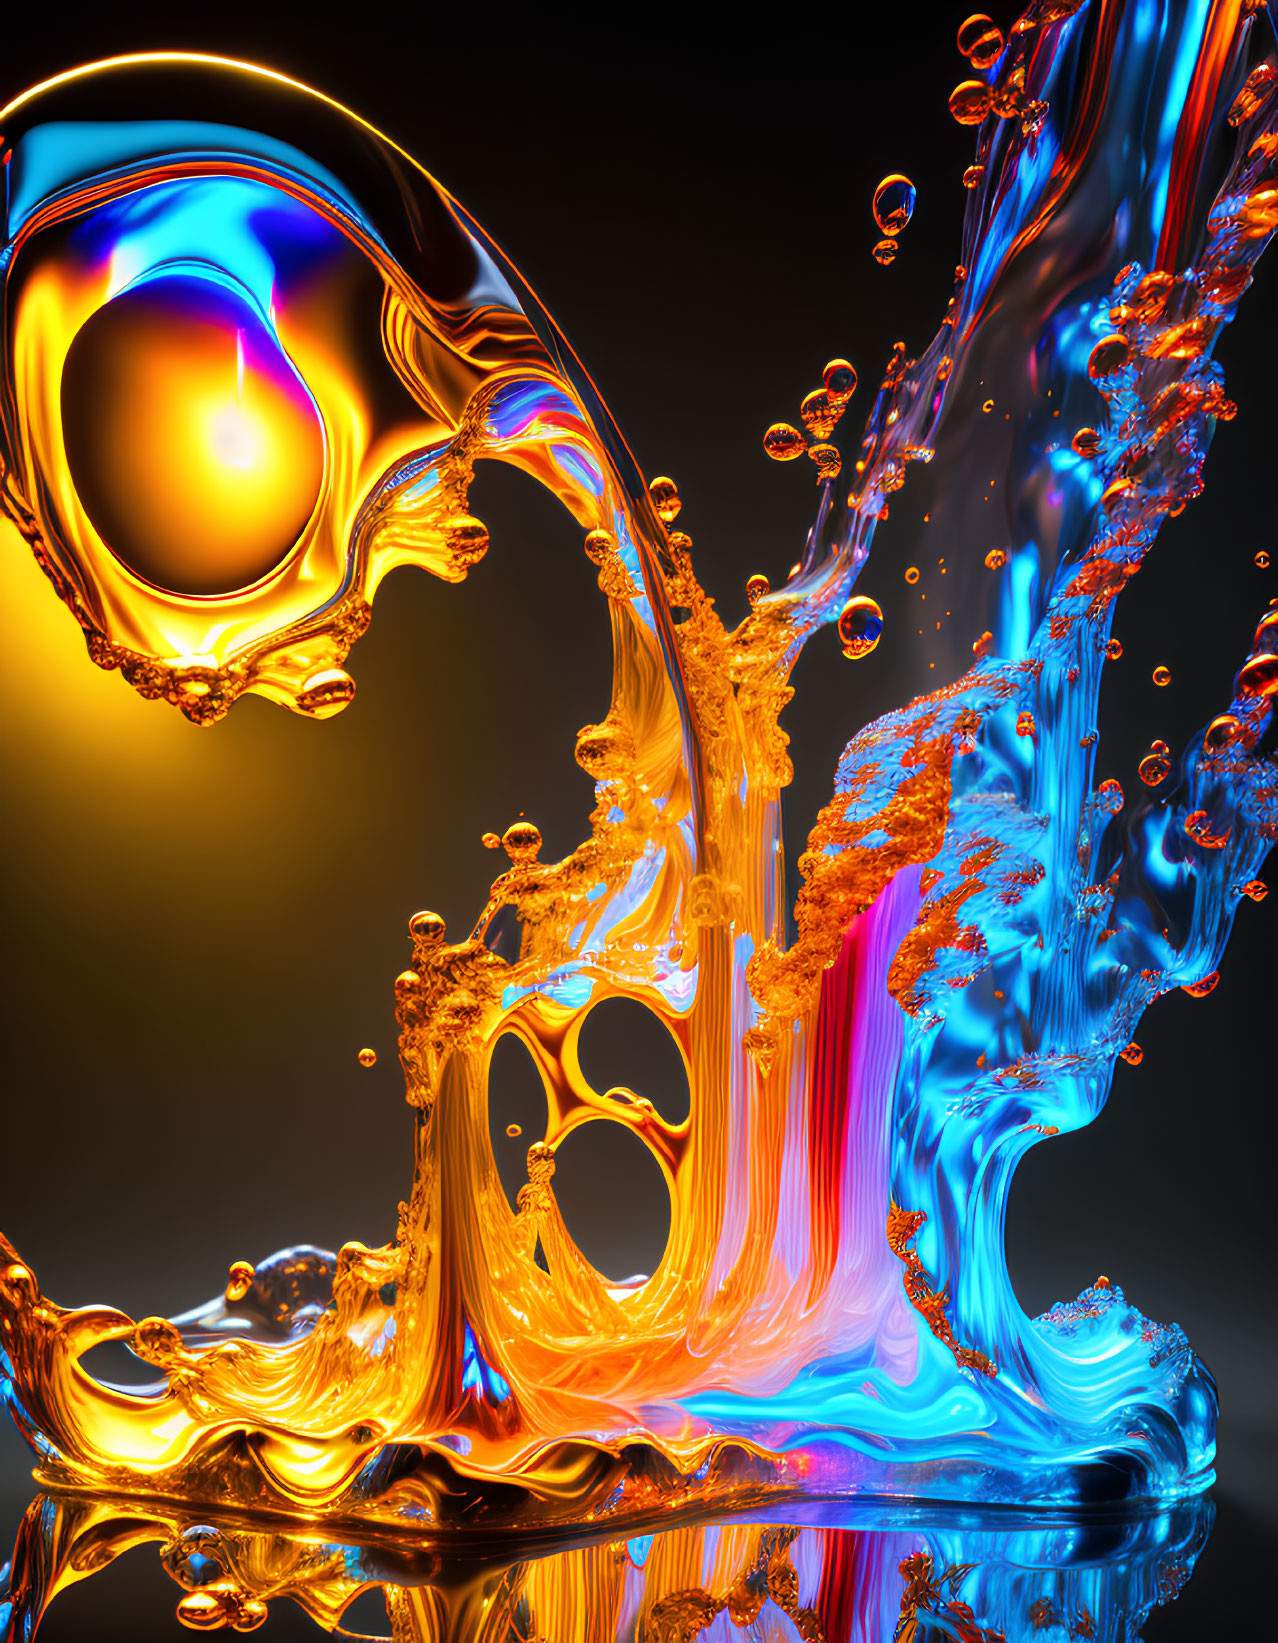 Colorful 3D rendering of dynamic liquid splash in blue and orange hues